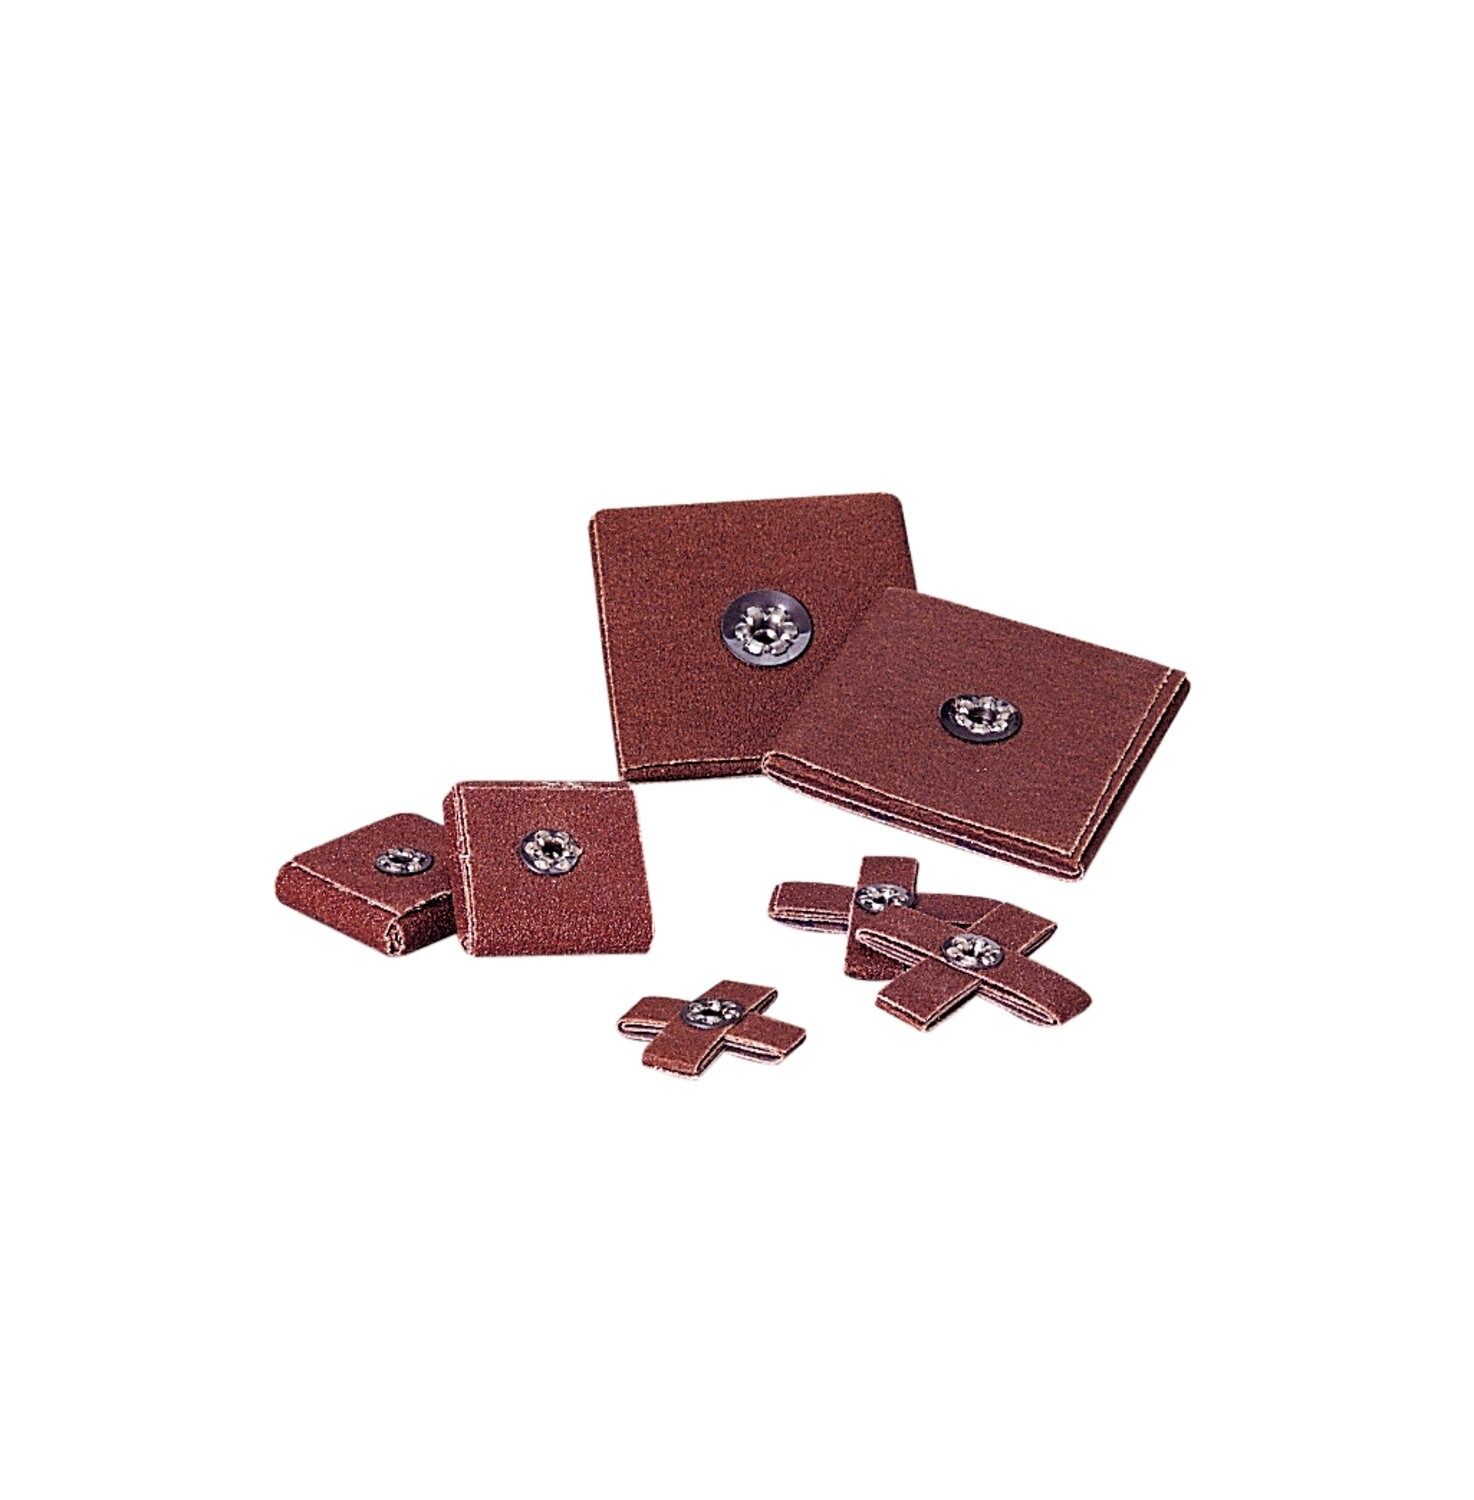 7100105471 - Standard Abrasives S/C Cross Pad 724346, 8 PLY, 2 in x 2 in x 1/2 in,
8-32, 120, 100/Carton, 1000 ea/Case